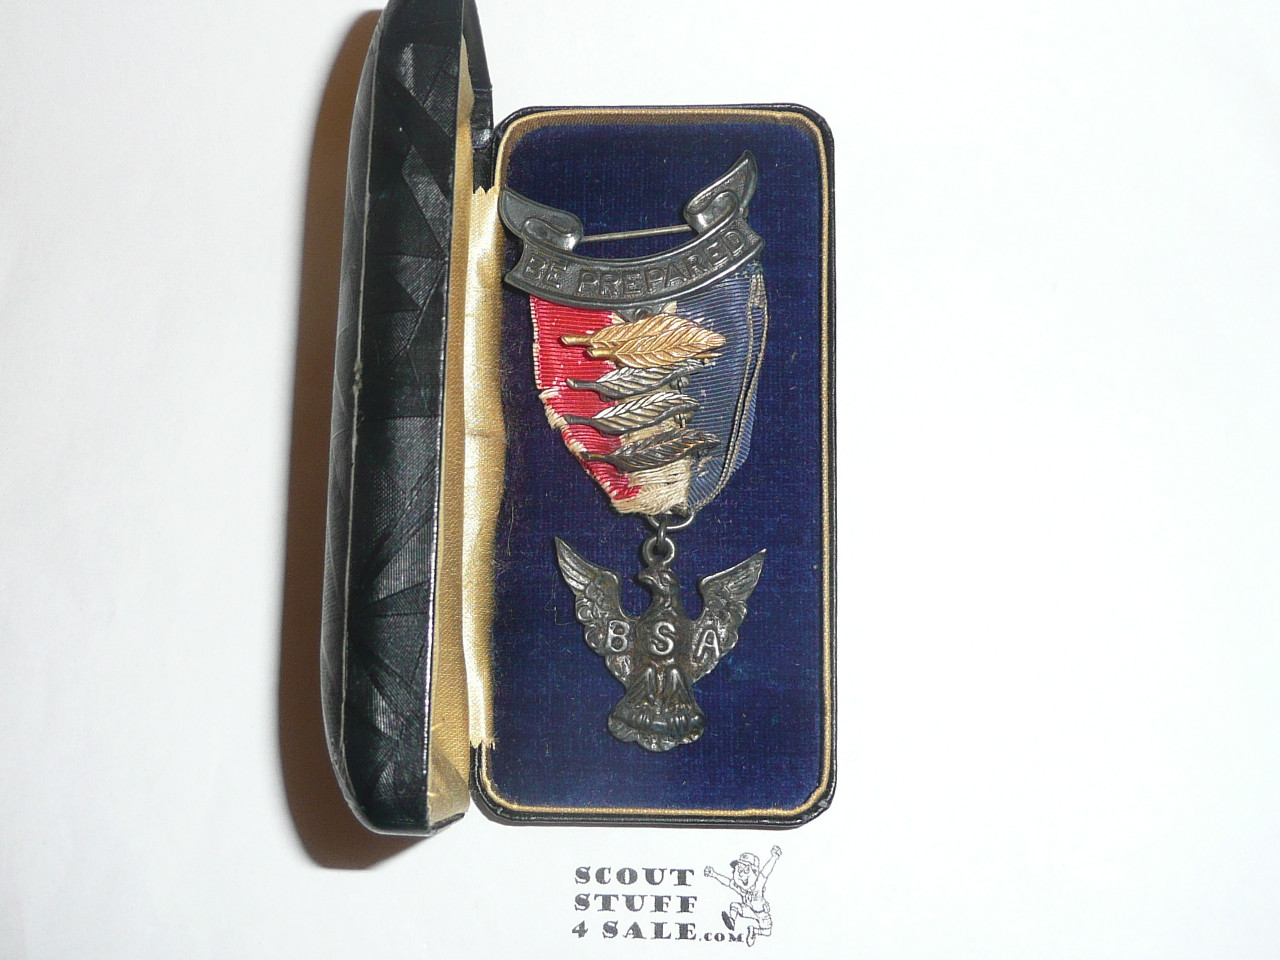 current eagle scout medal